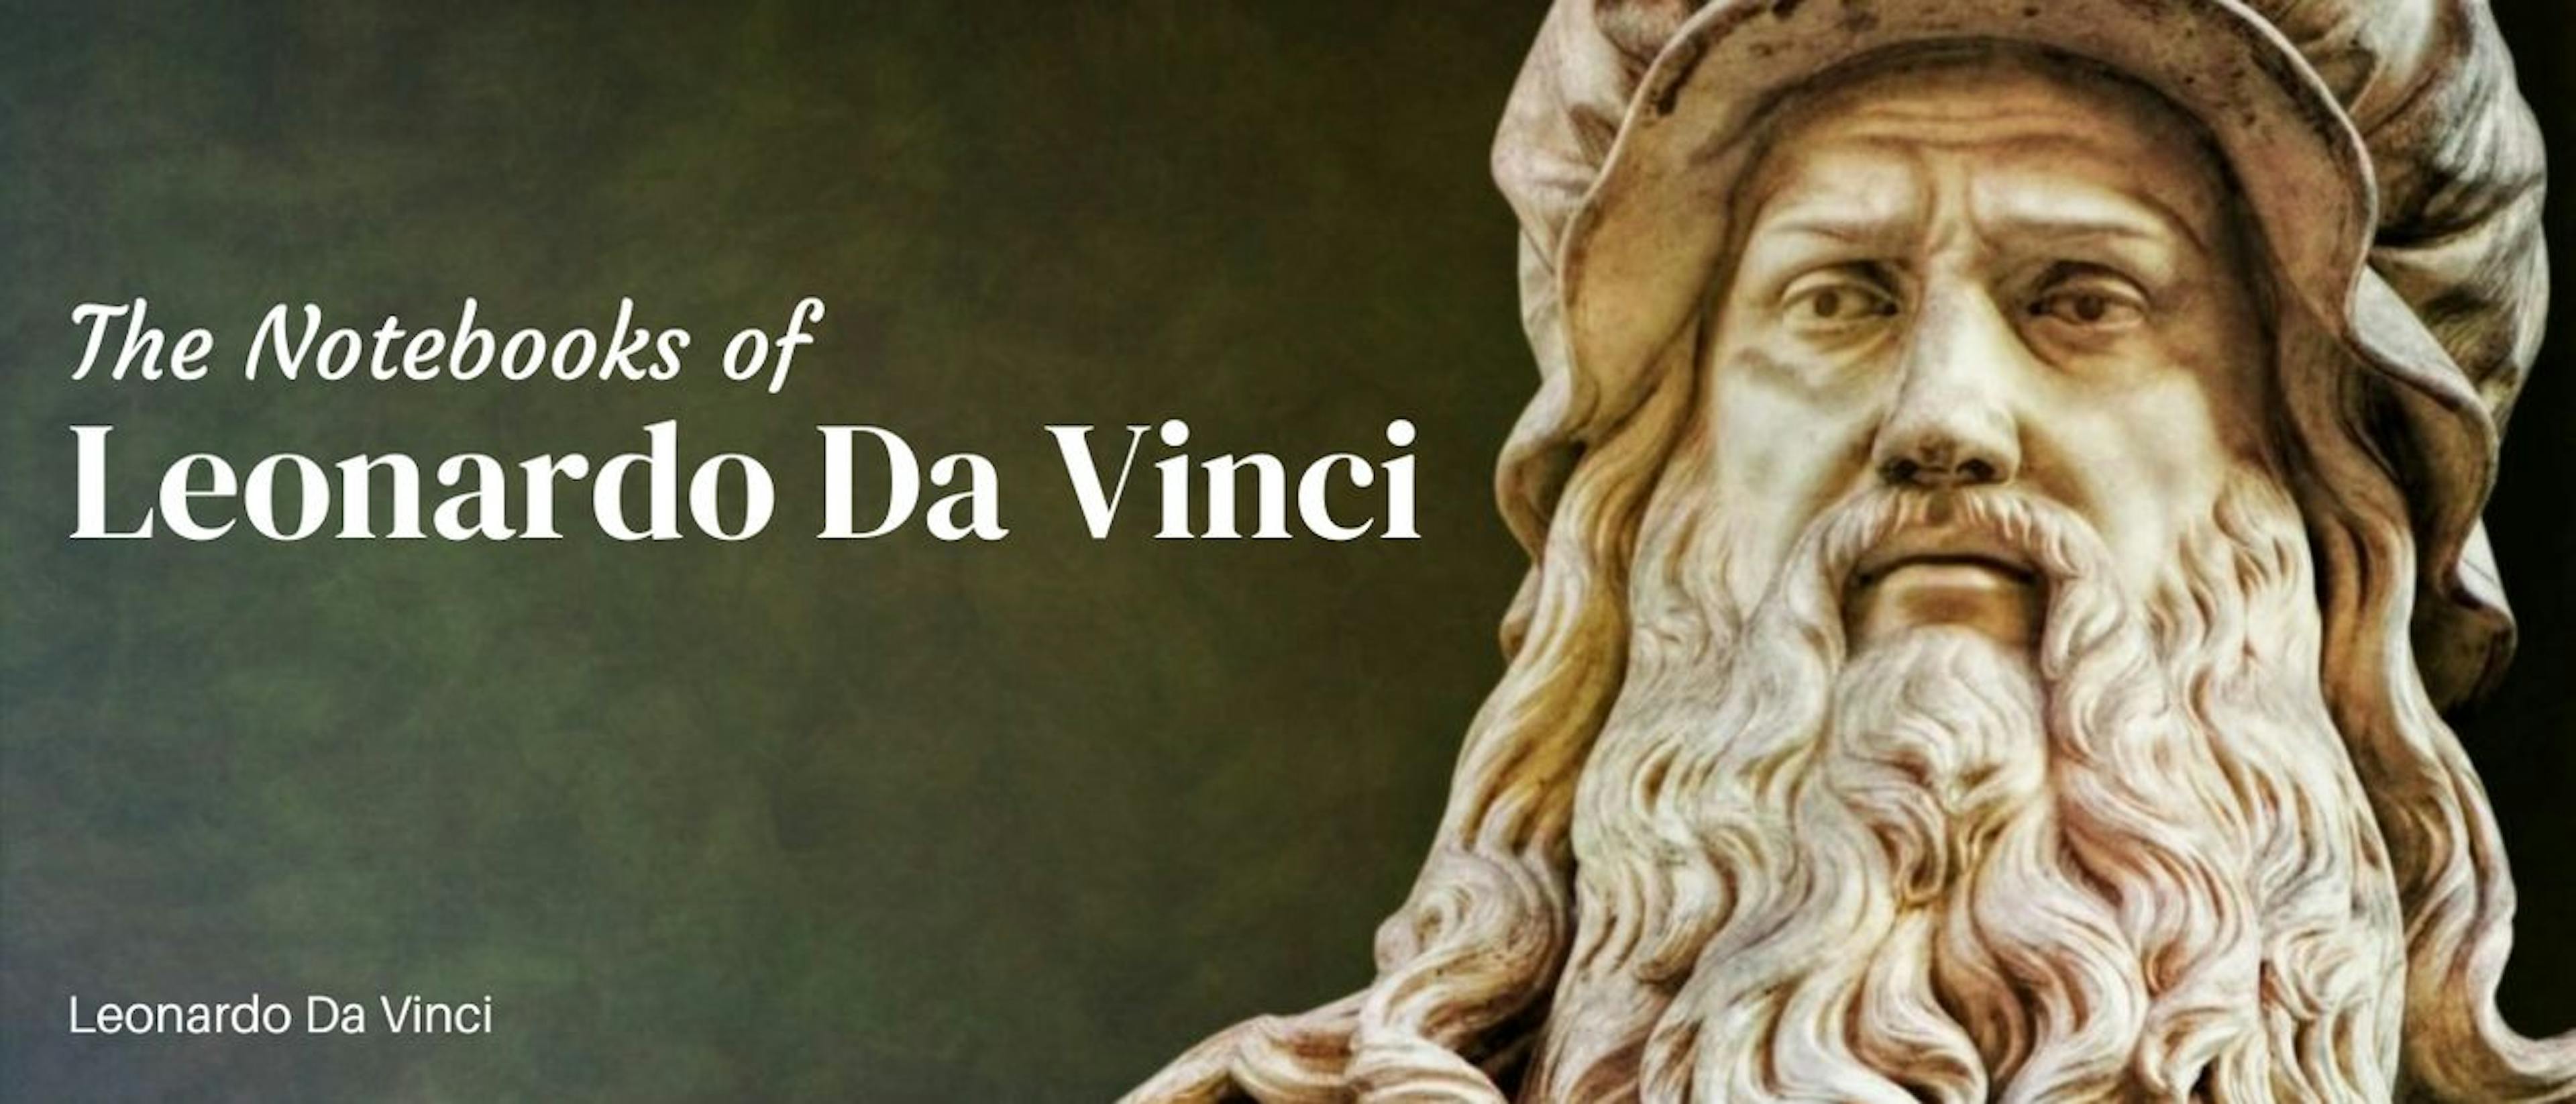 featured image - The Notebooks of Leonardo Da Vinci — Complete by Leonardo da Vinci - Table of Links